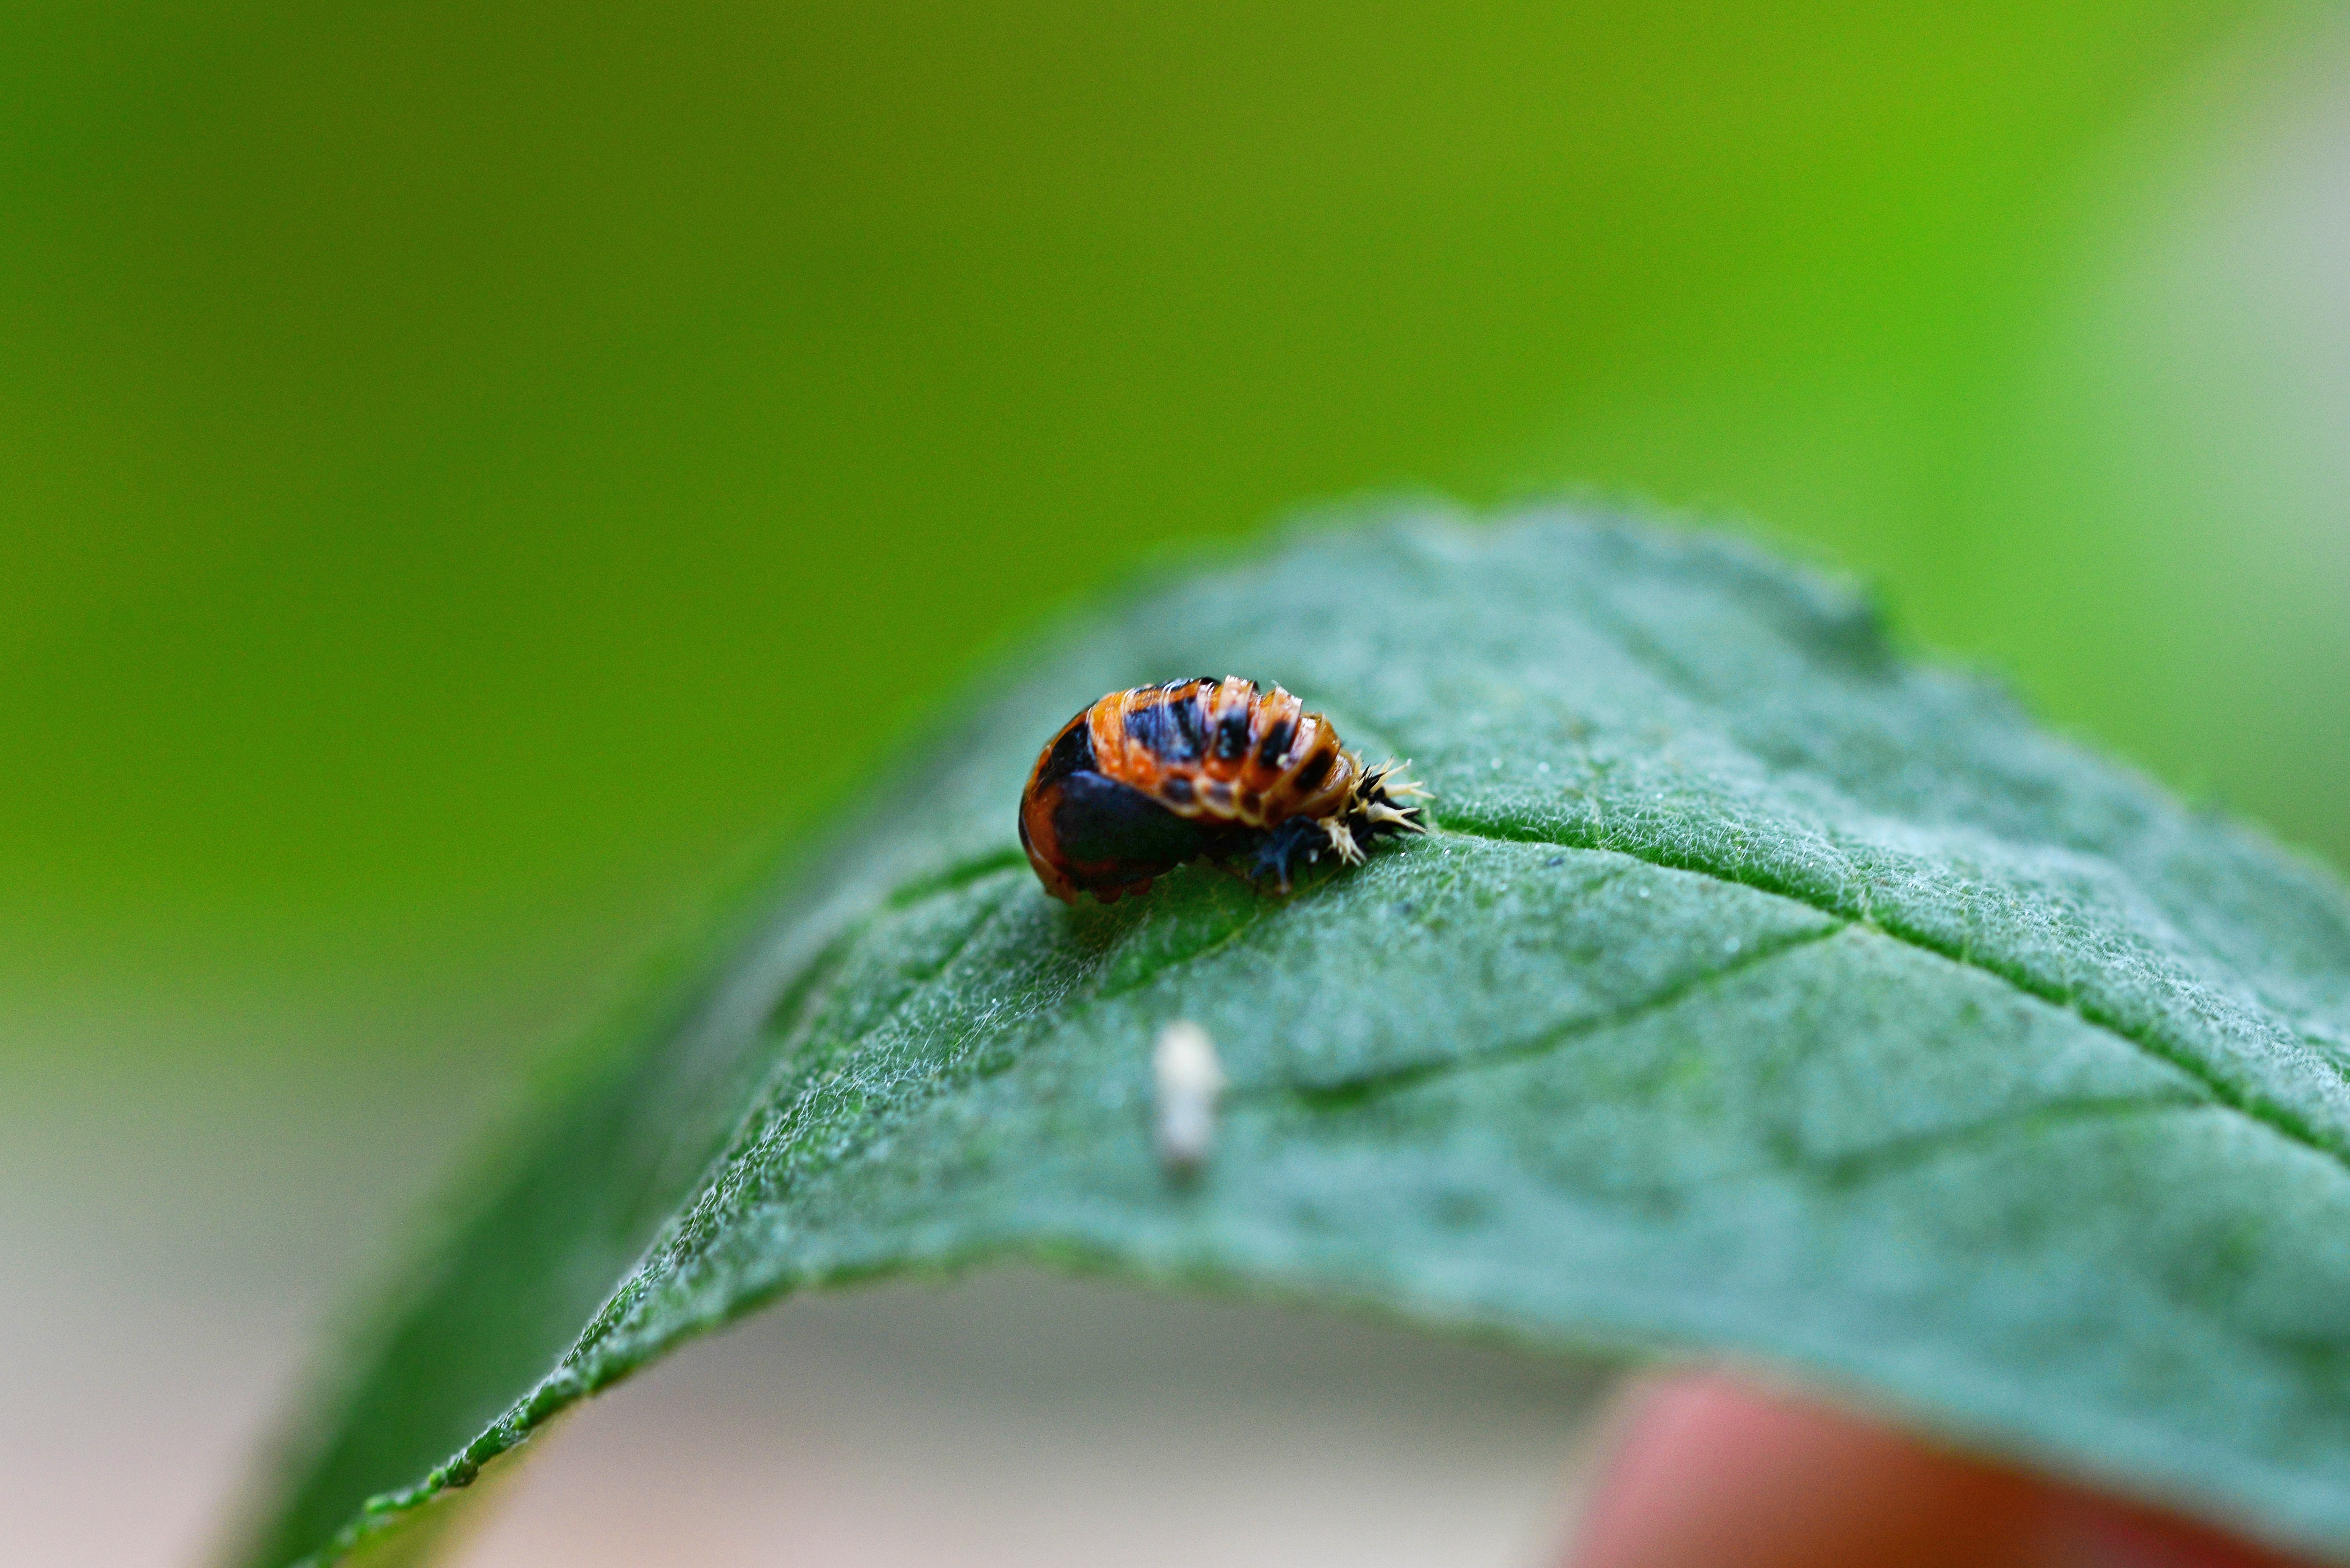 ladybug larvae on green leaf in macro photography during daytime